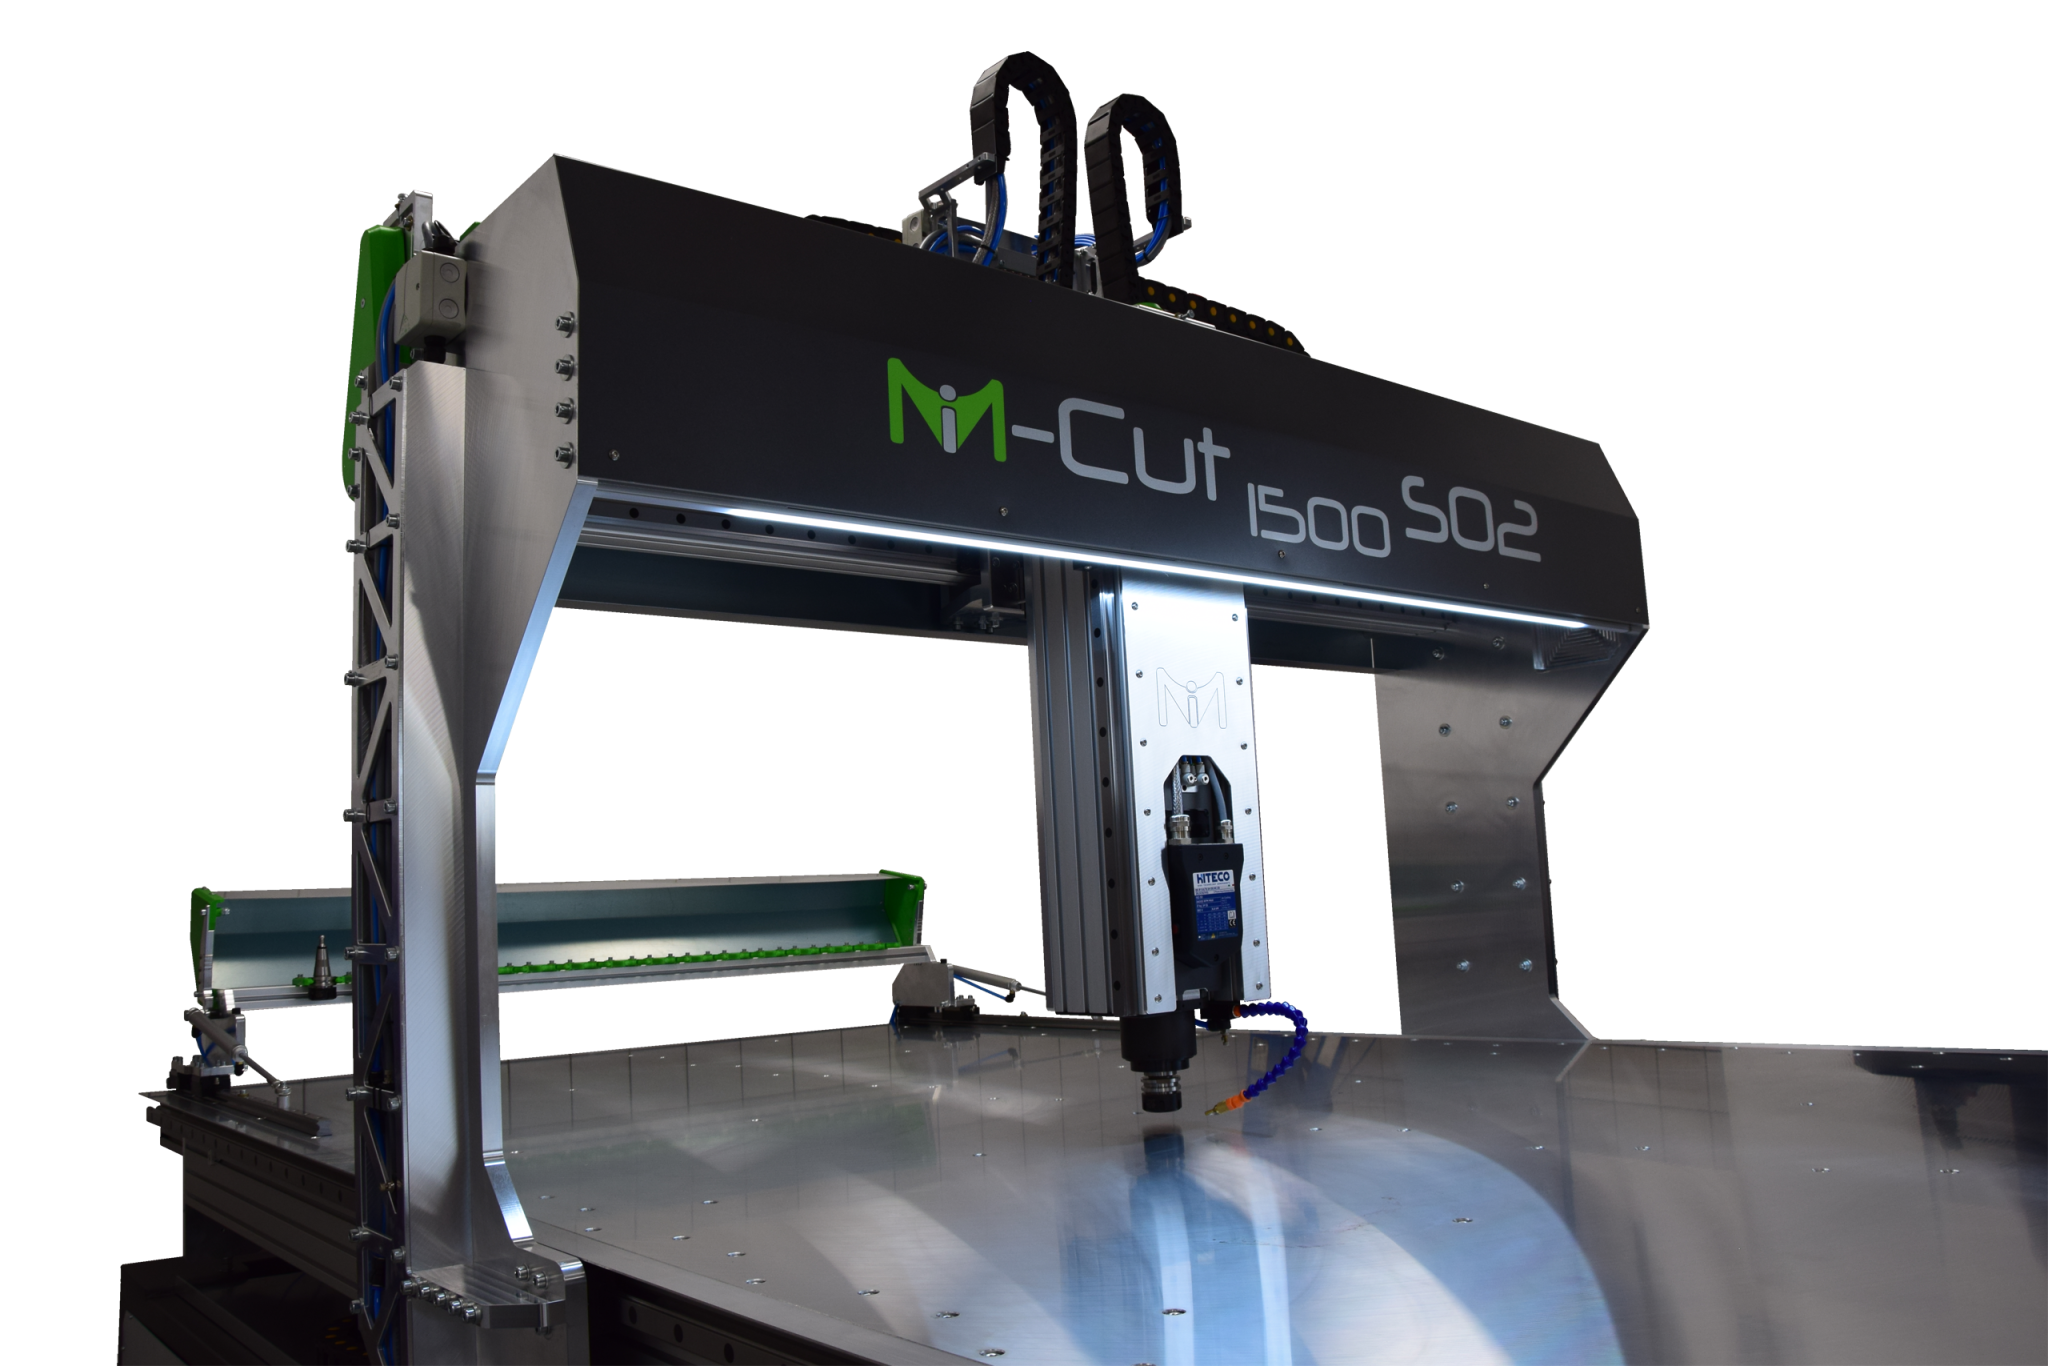 iM-Cut 1500 SO2 FW CNC Portalfräsmaschine – iM-Cut 3D-Cut & 3D-Print